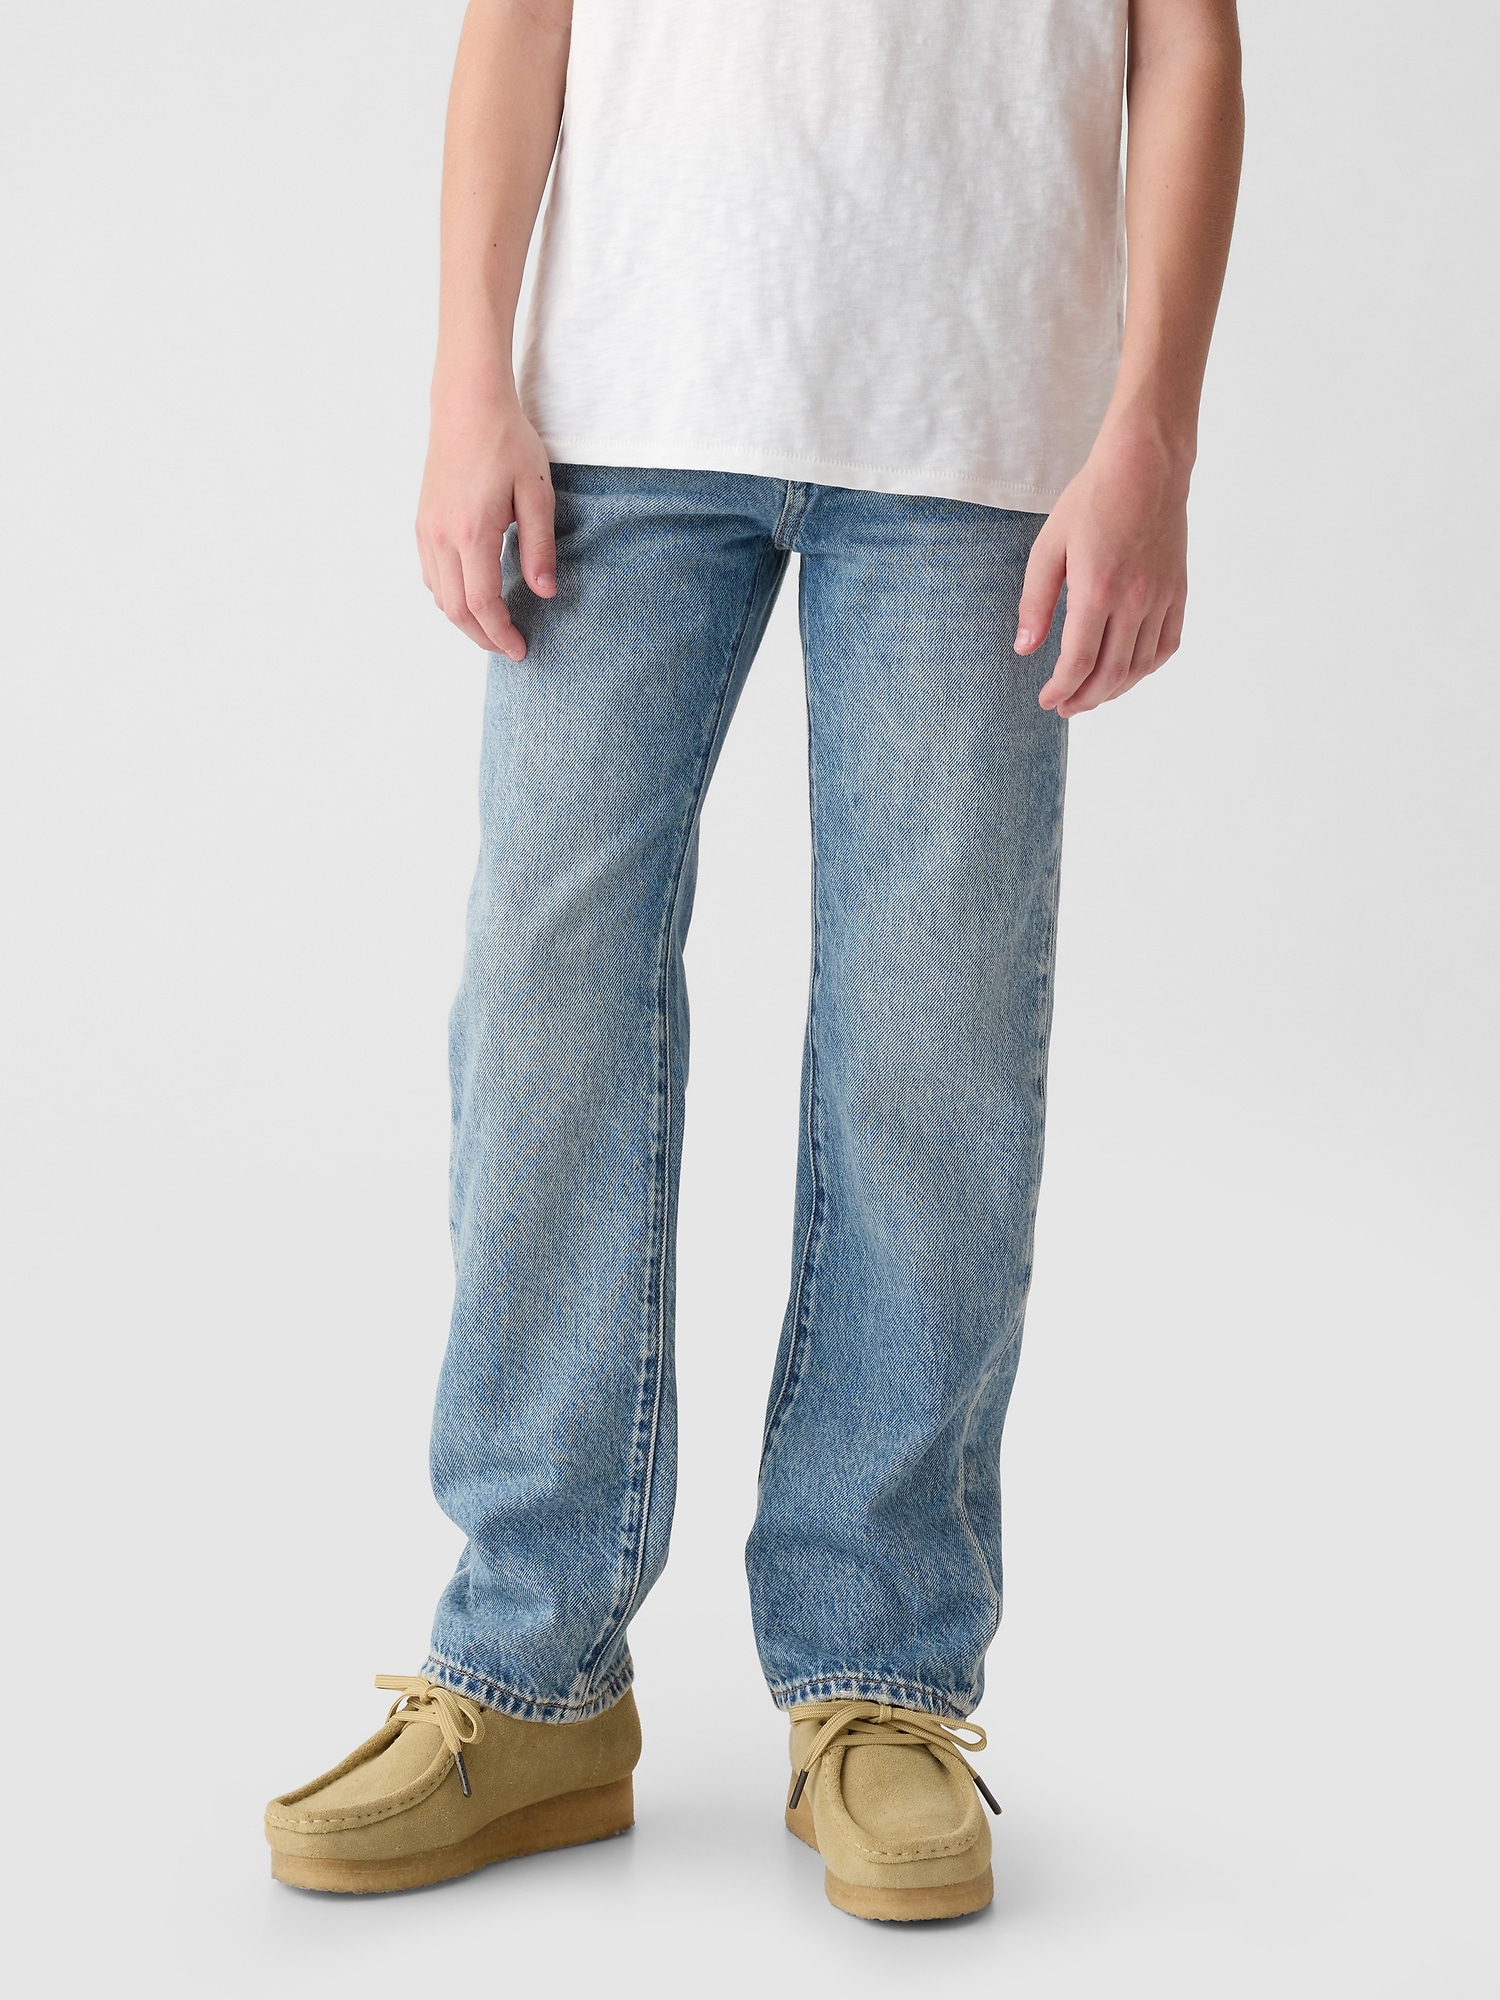 Kids Original Straight Jeans | Gap